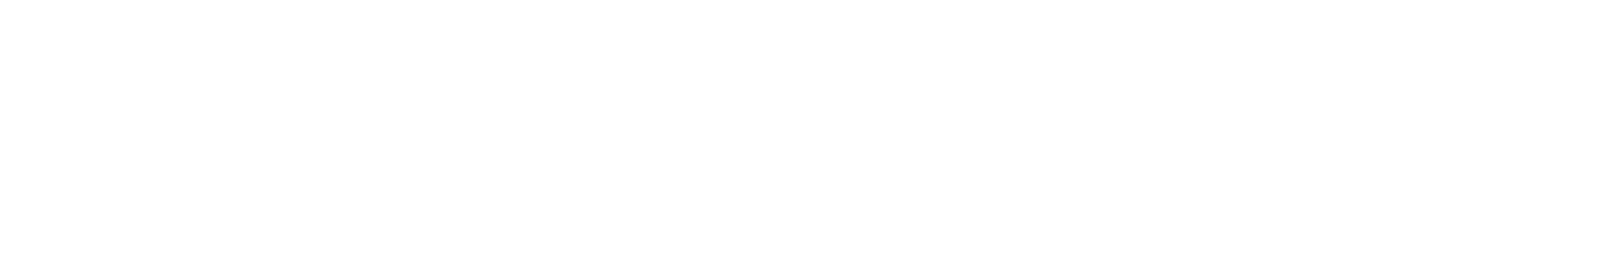 UX Design - Web Development